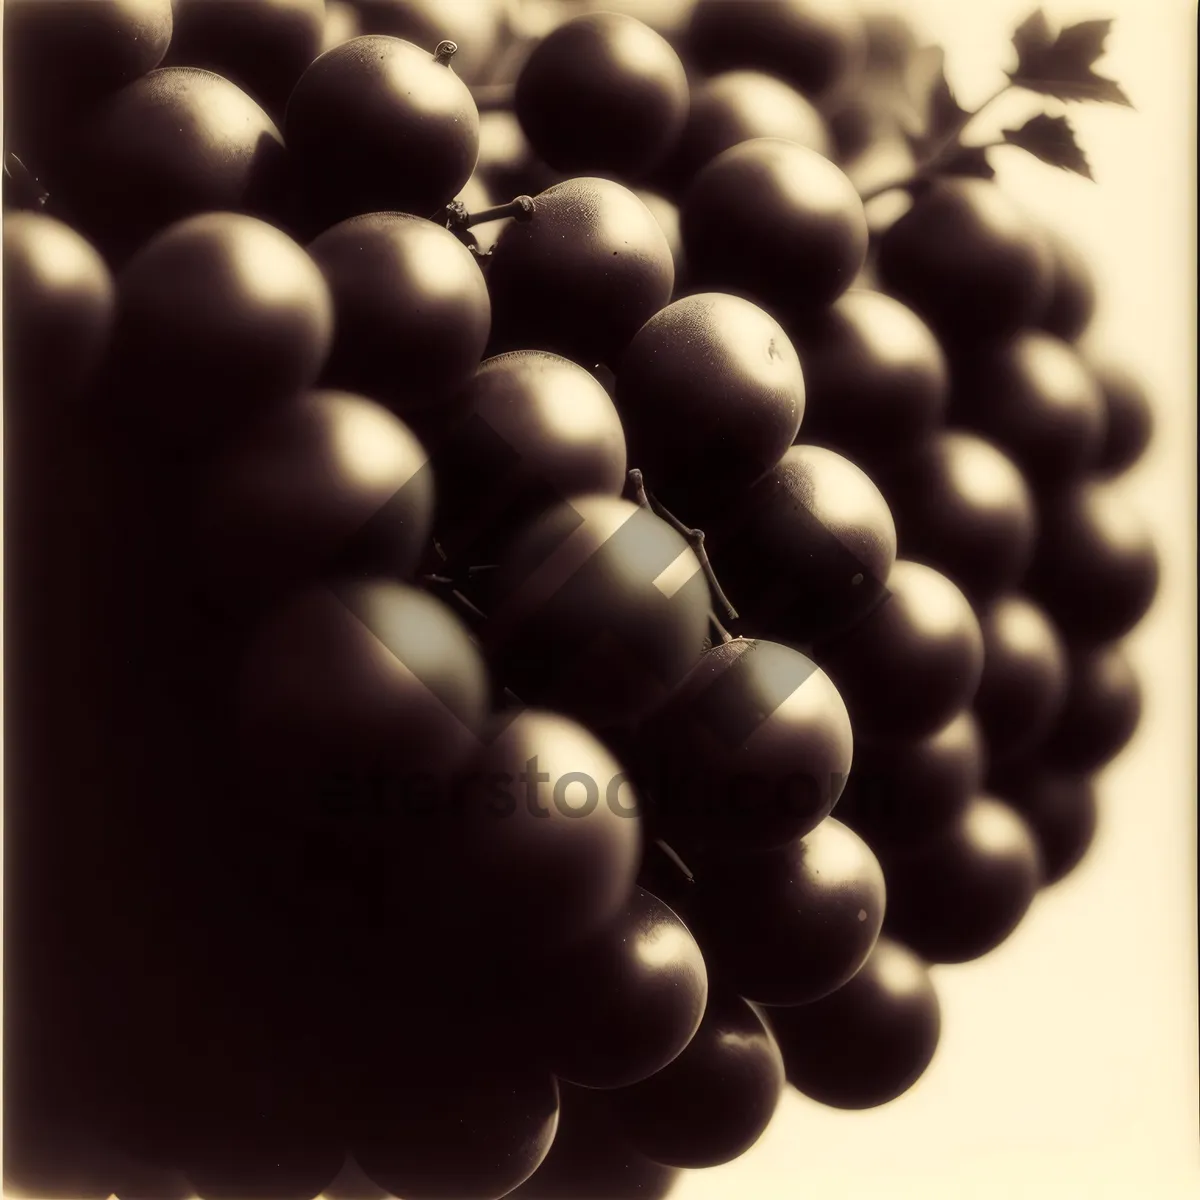 Picture of Juicy Organic Blackberry Grapes in Vineyard